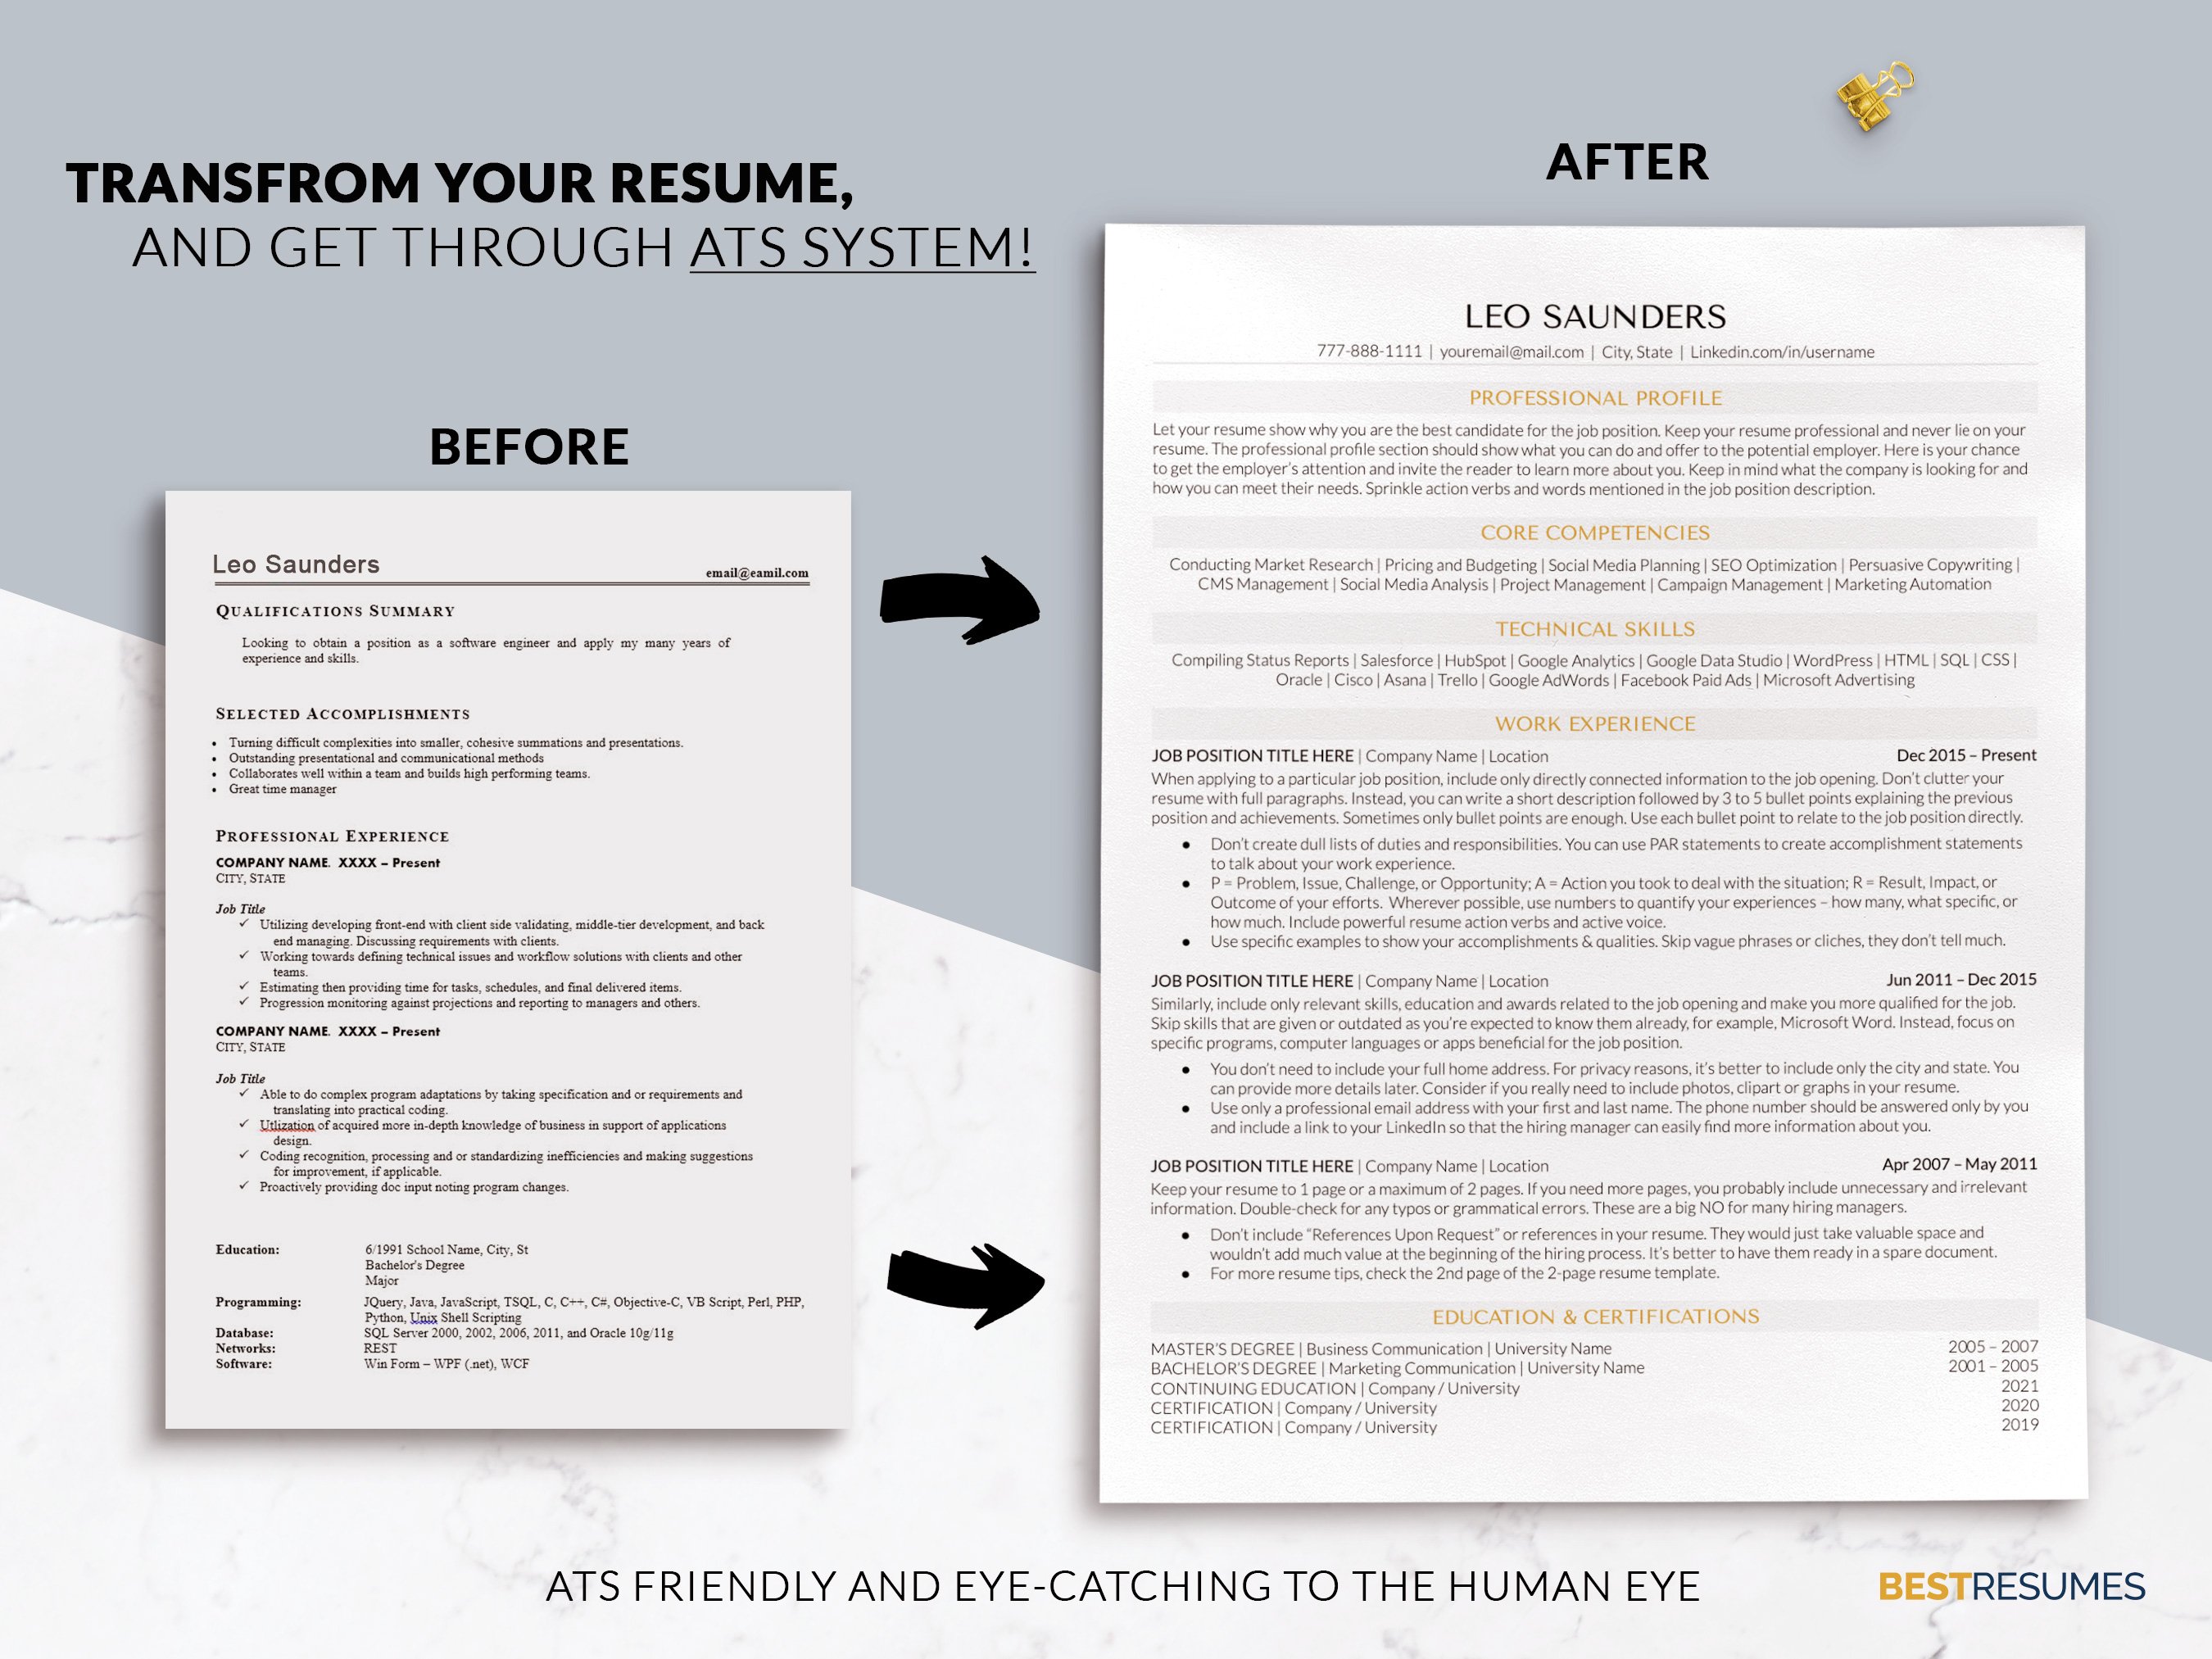 resume template google docs transform your resume leo saunder 324